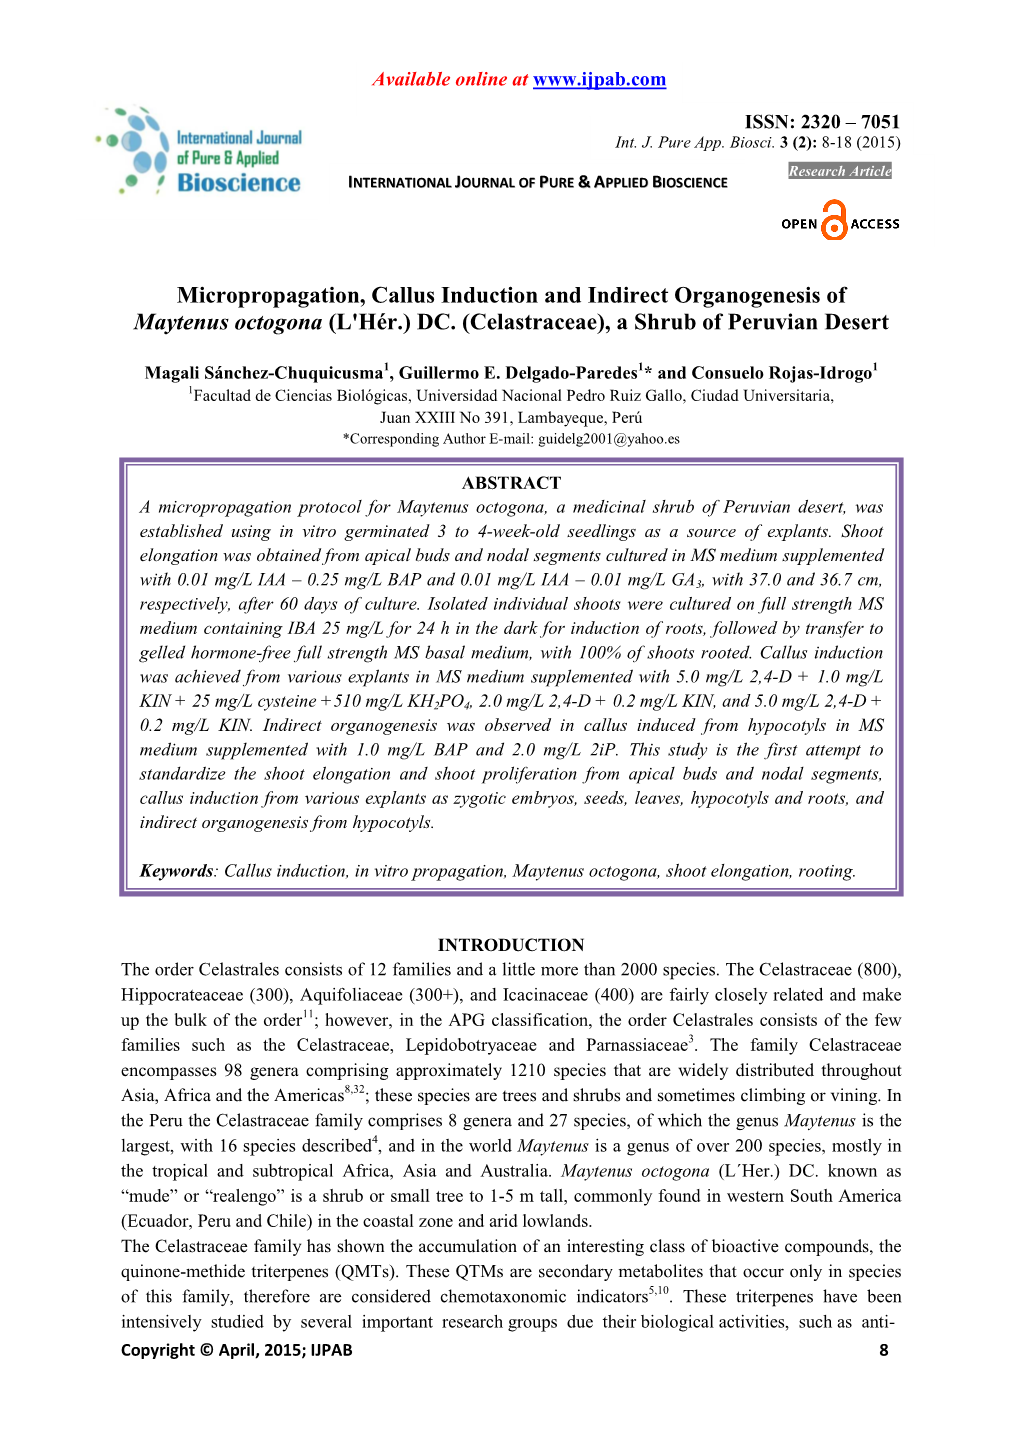 Micropropagation, Callus Induction and Indirect Organogenesis of Maytenus Octogona (L'hér.) DC